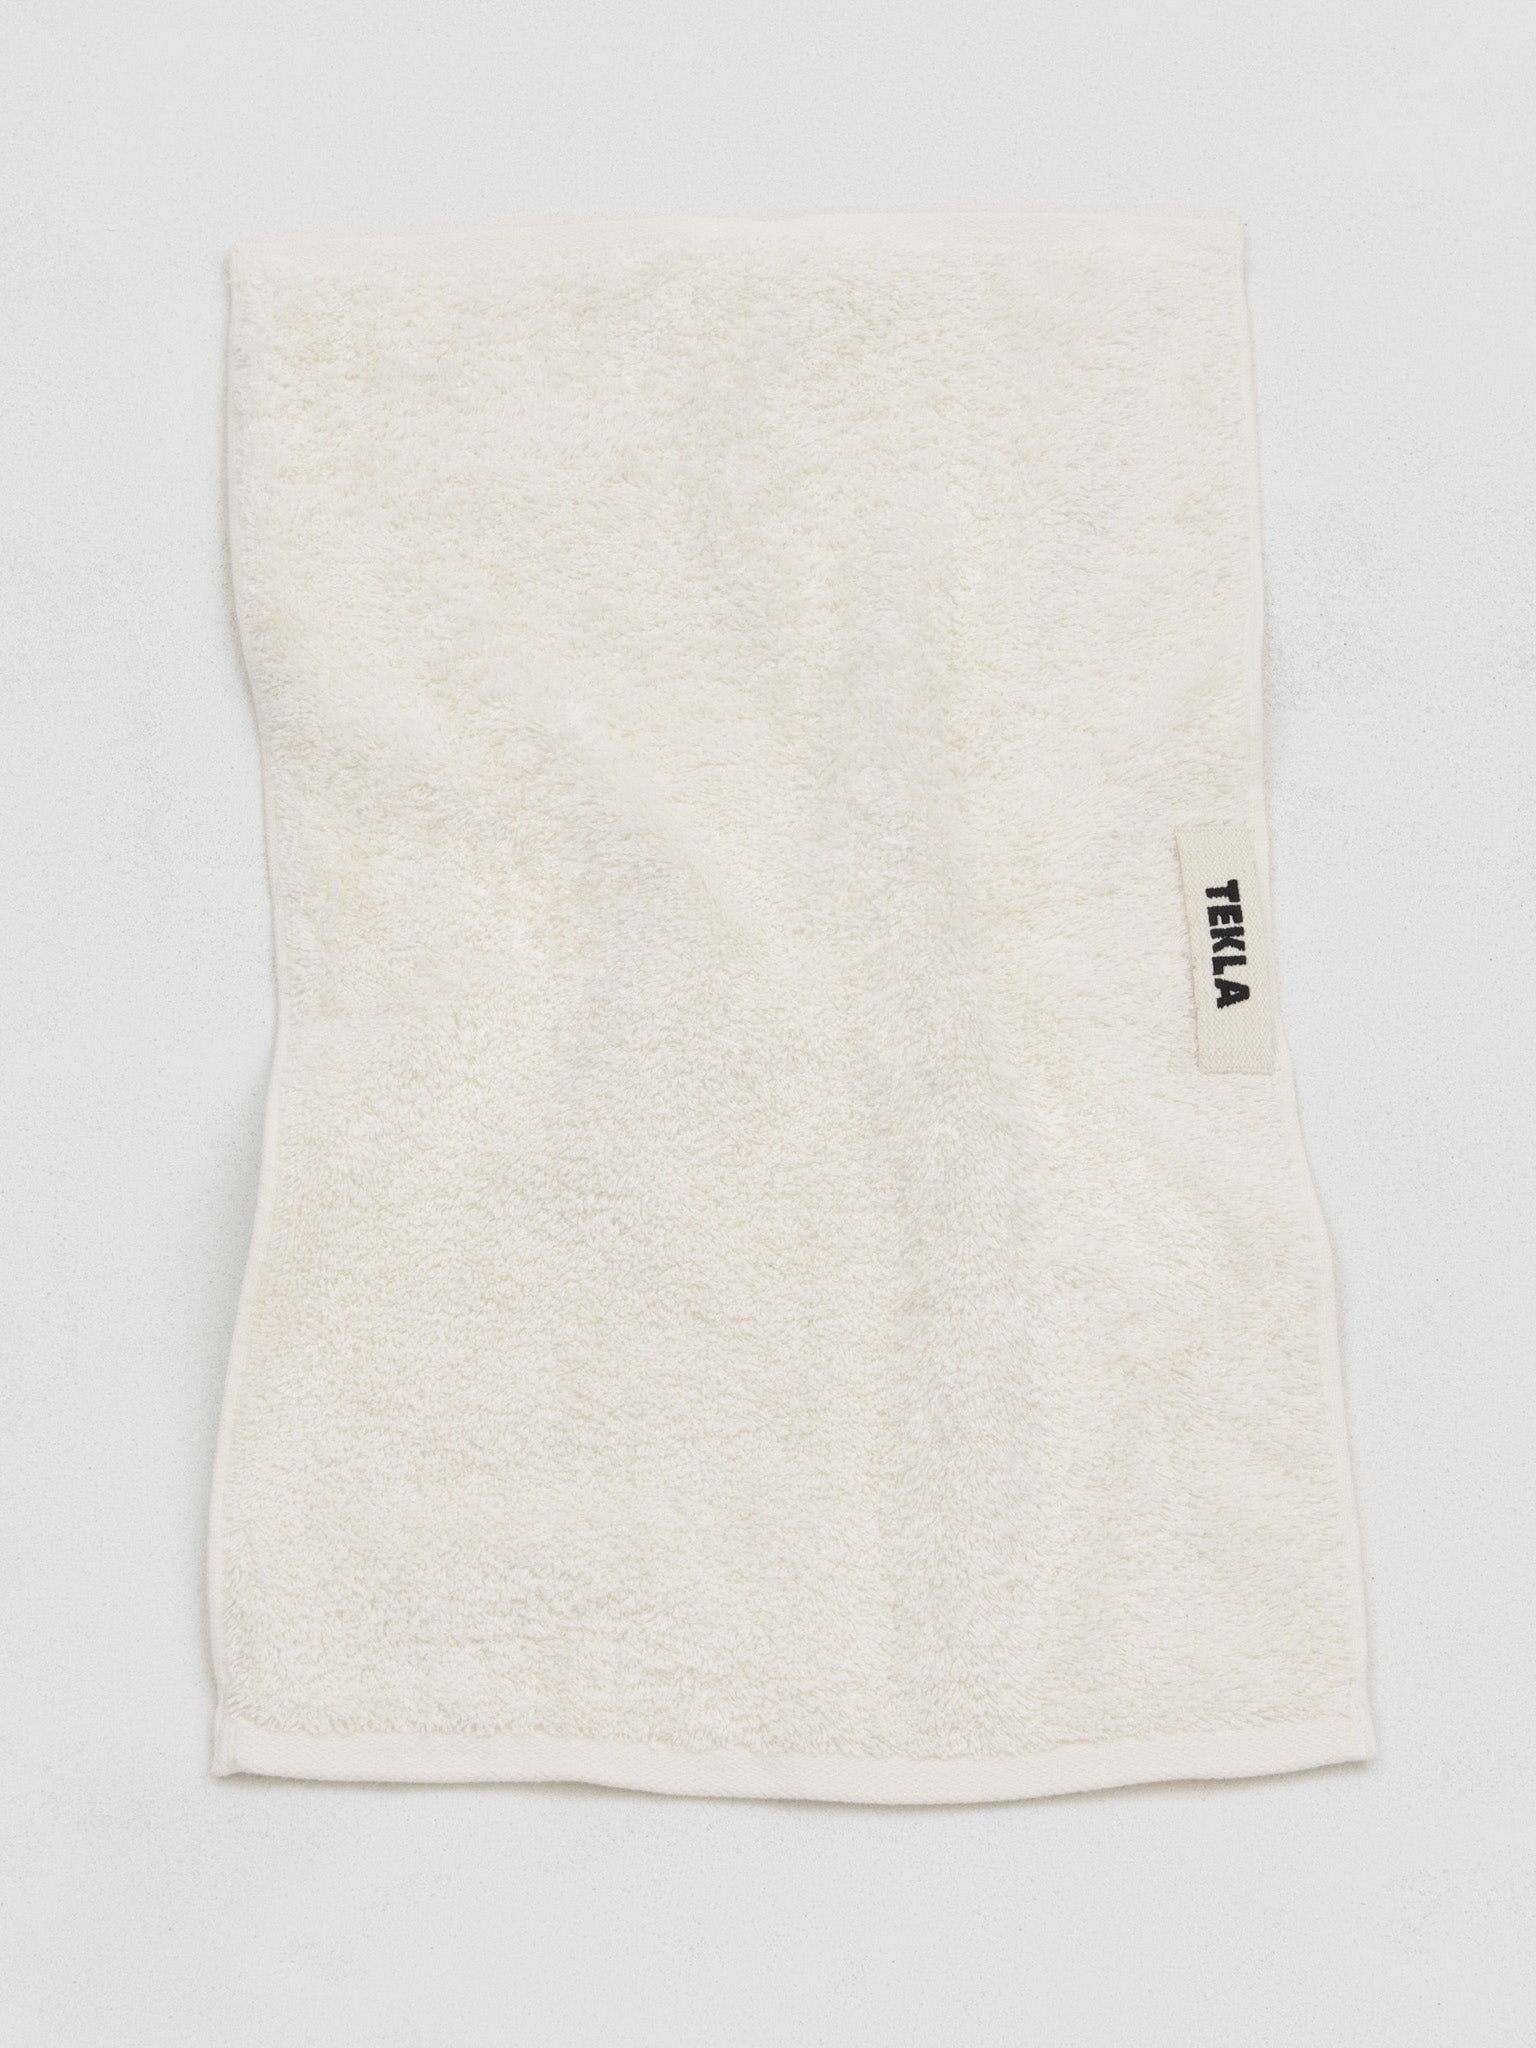 Gæstehåndklæde i Ivory